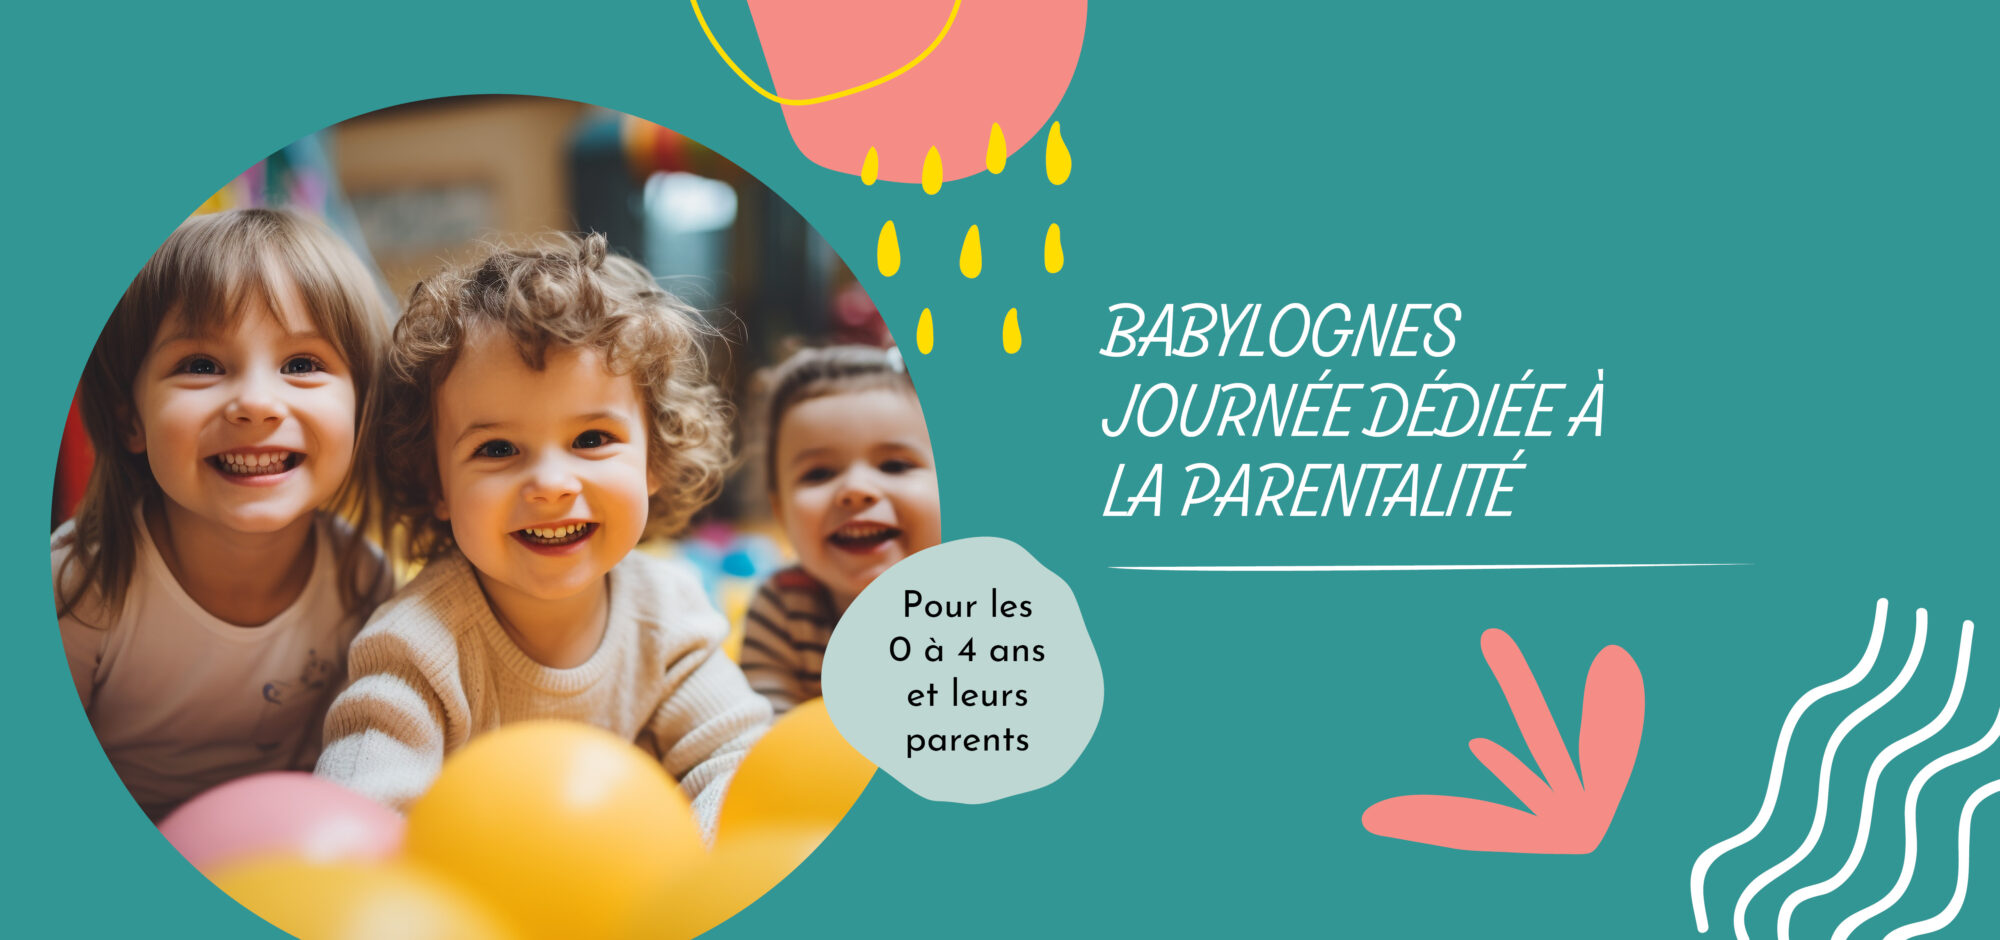 Actions-parentalite-BANDEAUX-babylognes